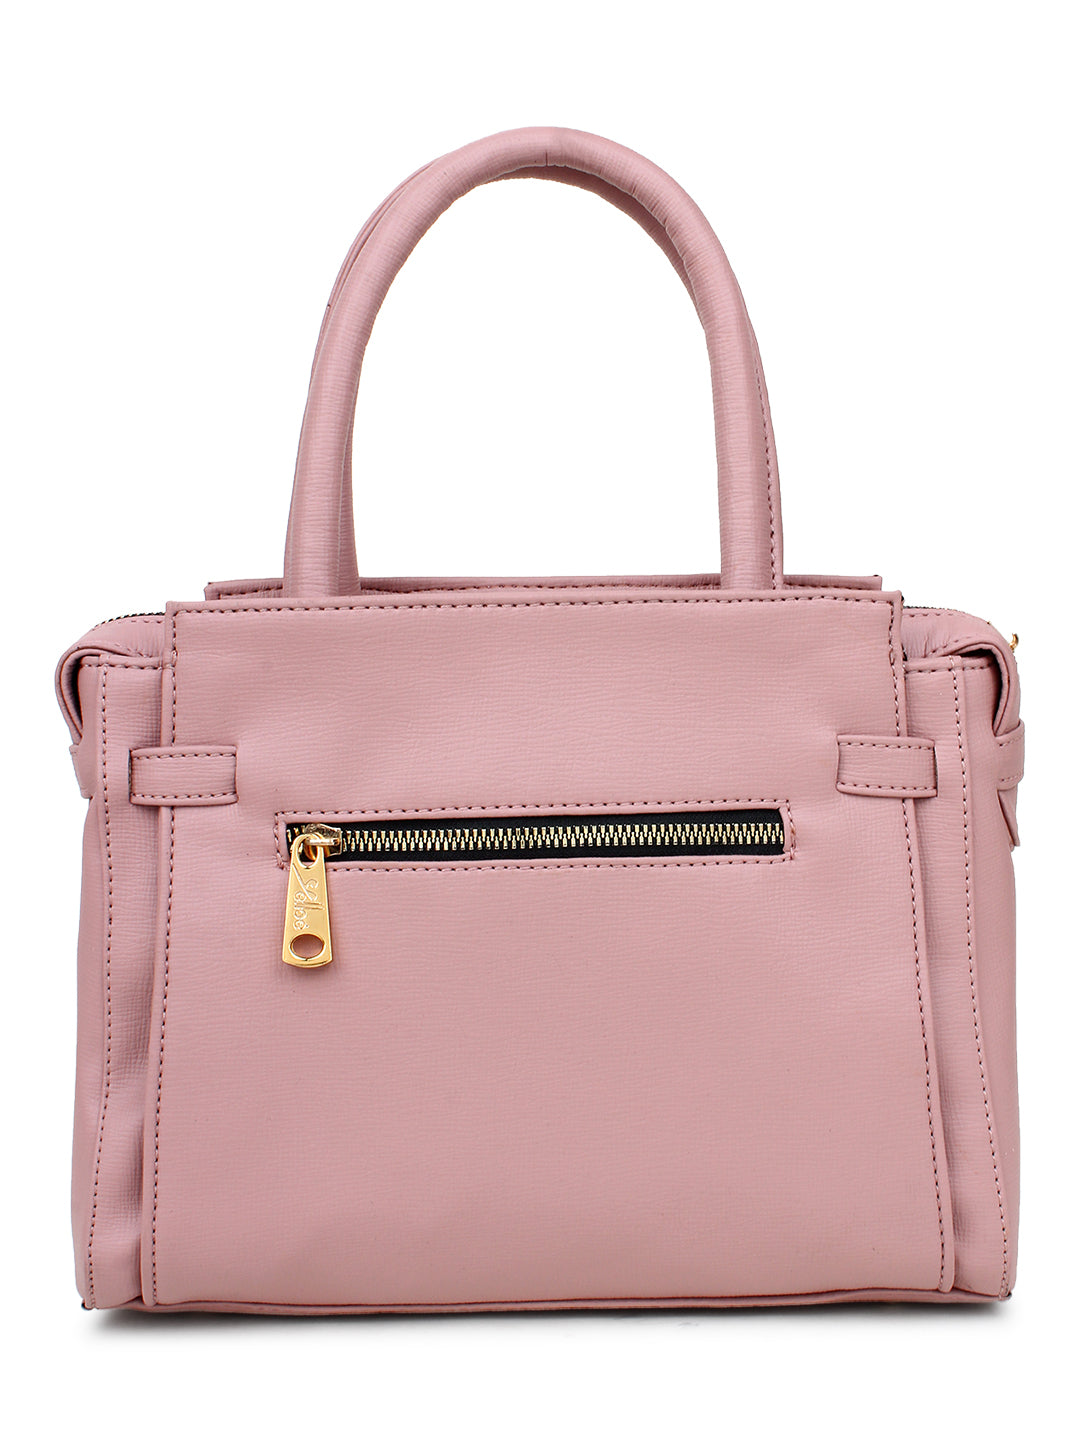 Women And Girls Handbag (Pink)